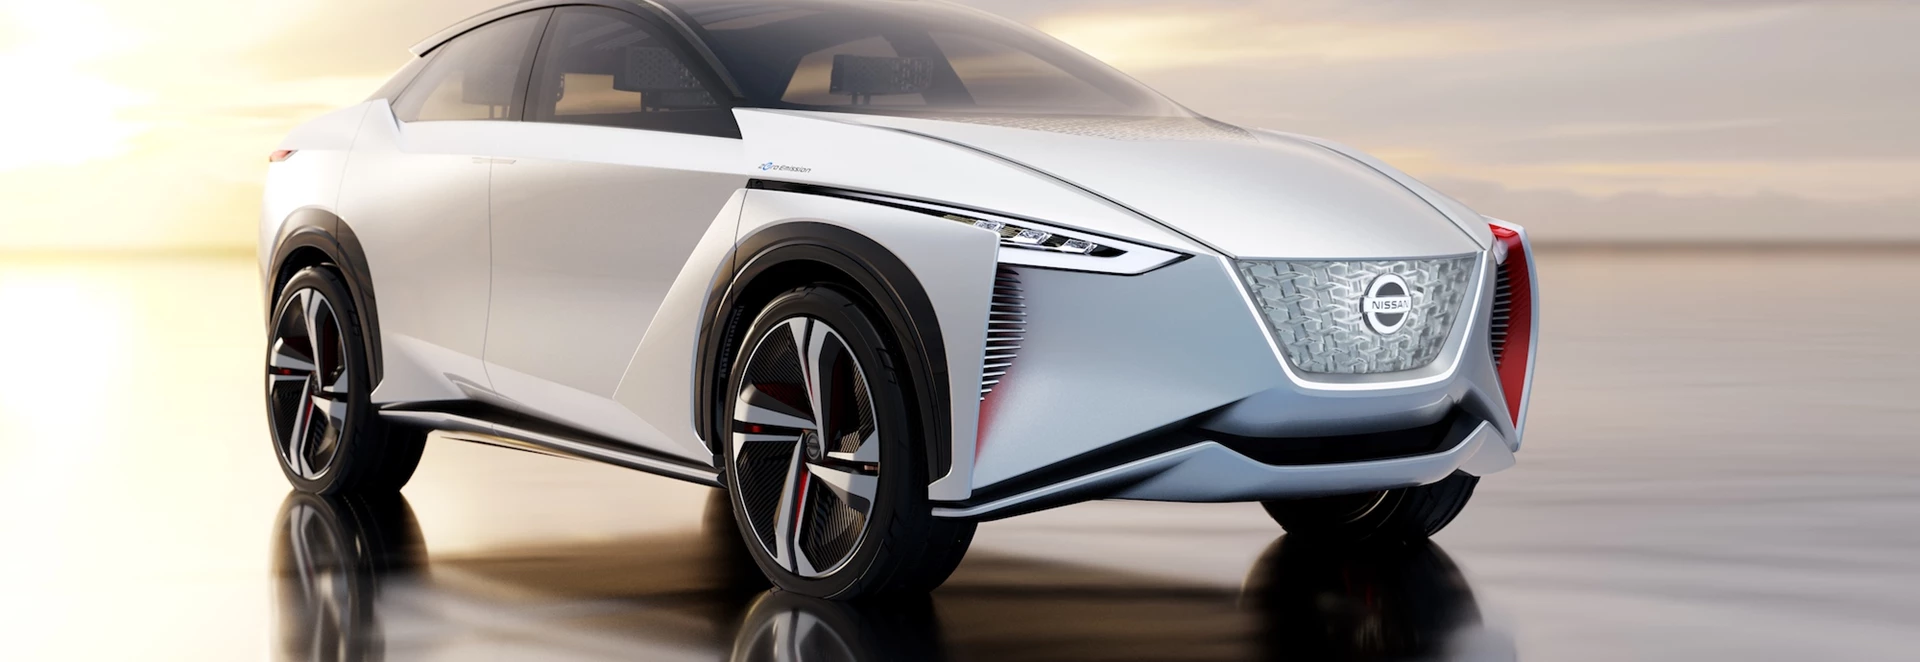 Nissan unveils IMx Concept at Tokyo Motor Show 2017 